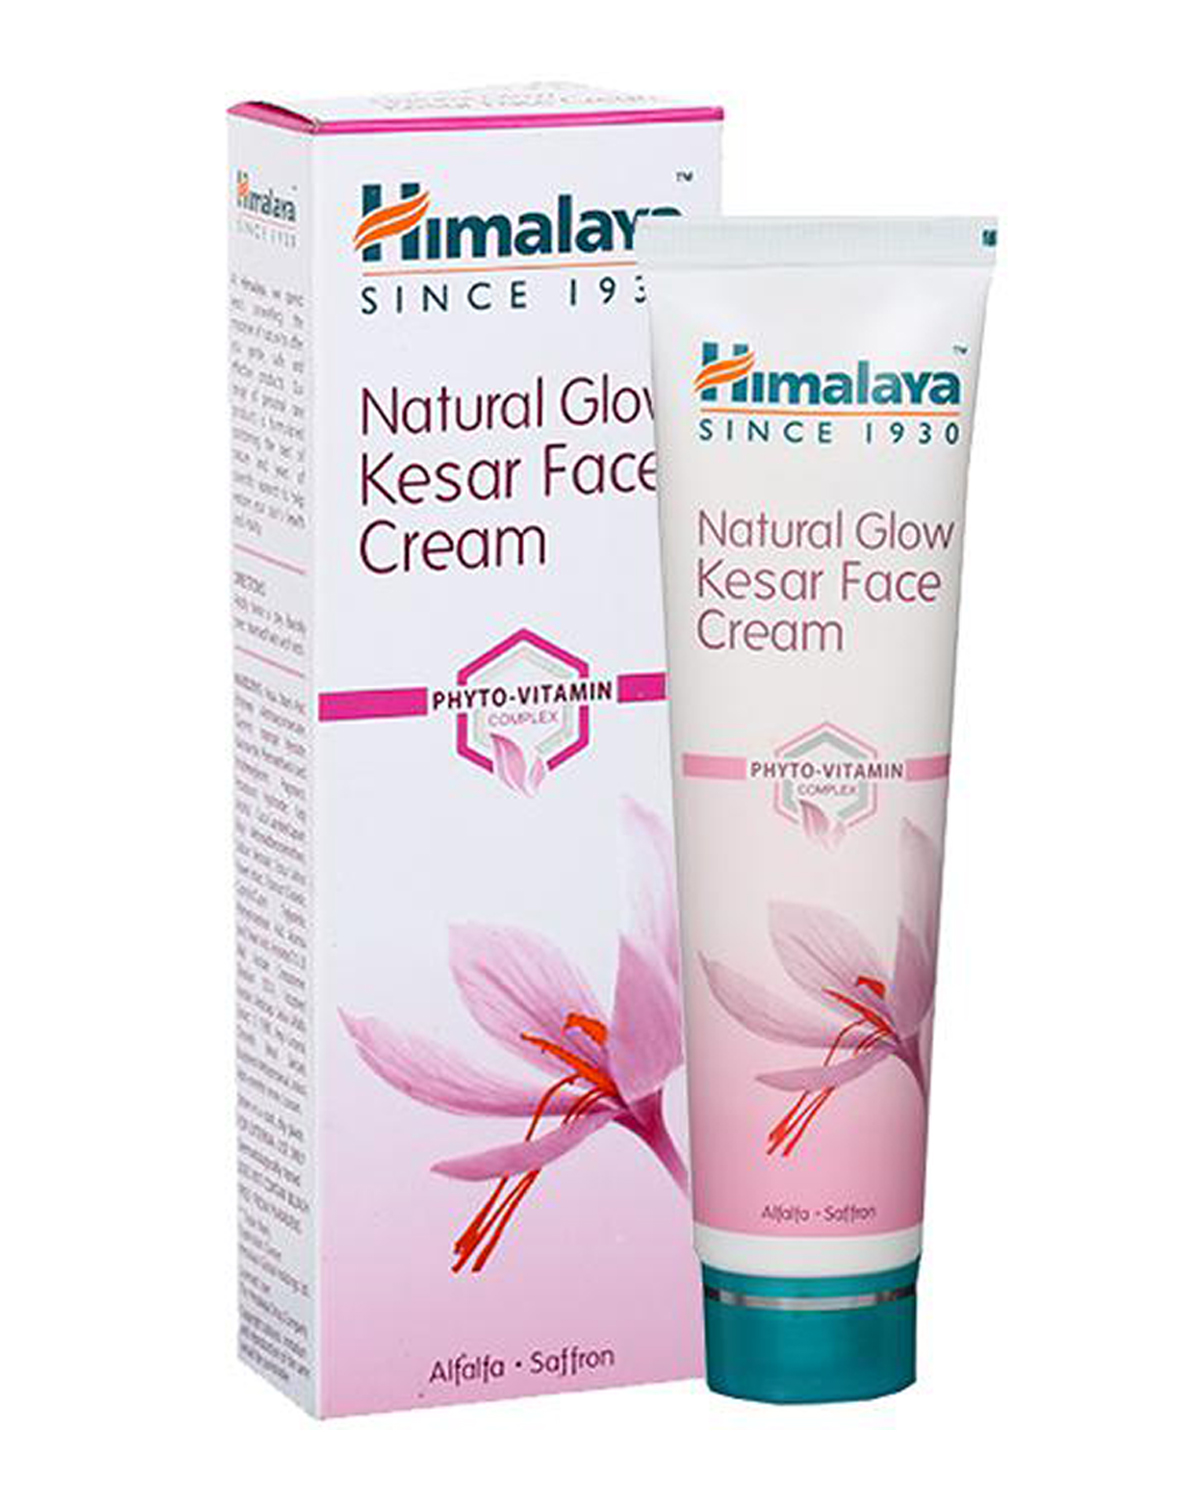 Buy Himalaya Natural Glow Kesar Face Cream With Phyto Vitamin G Online From ShopClues